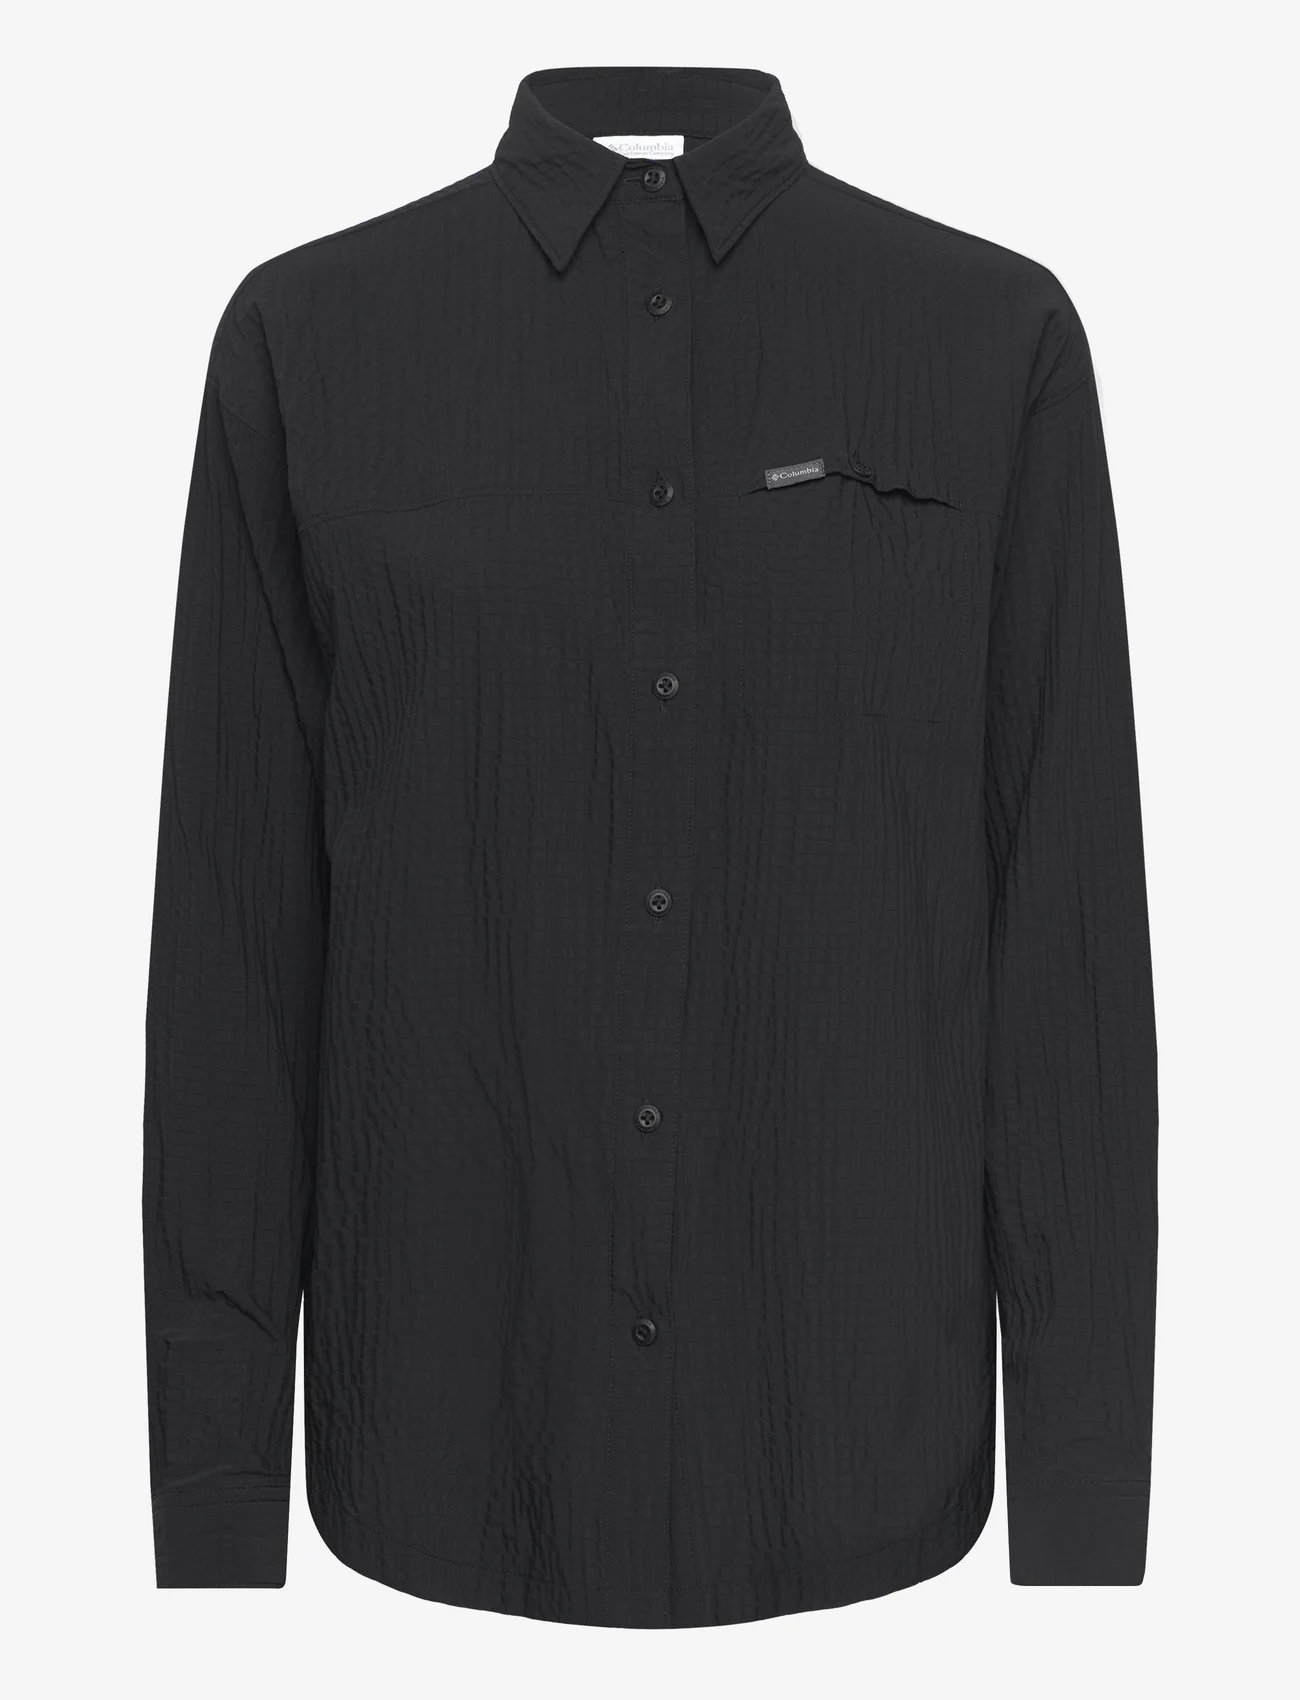 Columbia Sportswear - Boundless Trek Layering LS - langärmlige hemden - black - 0